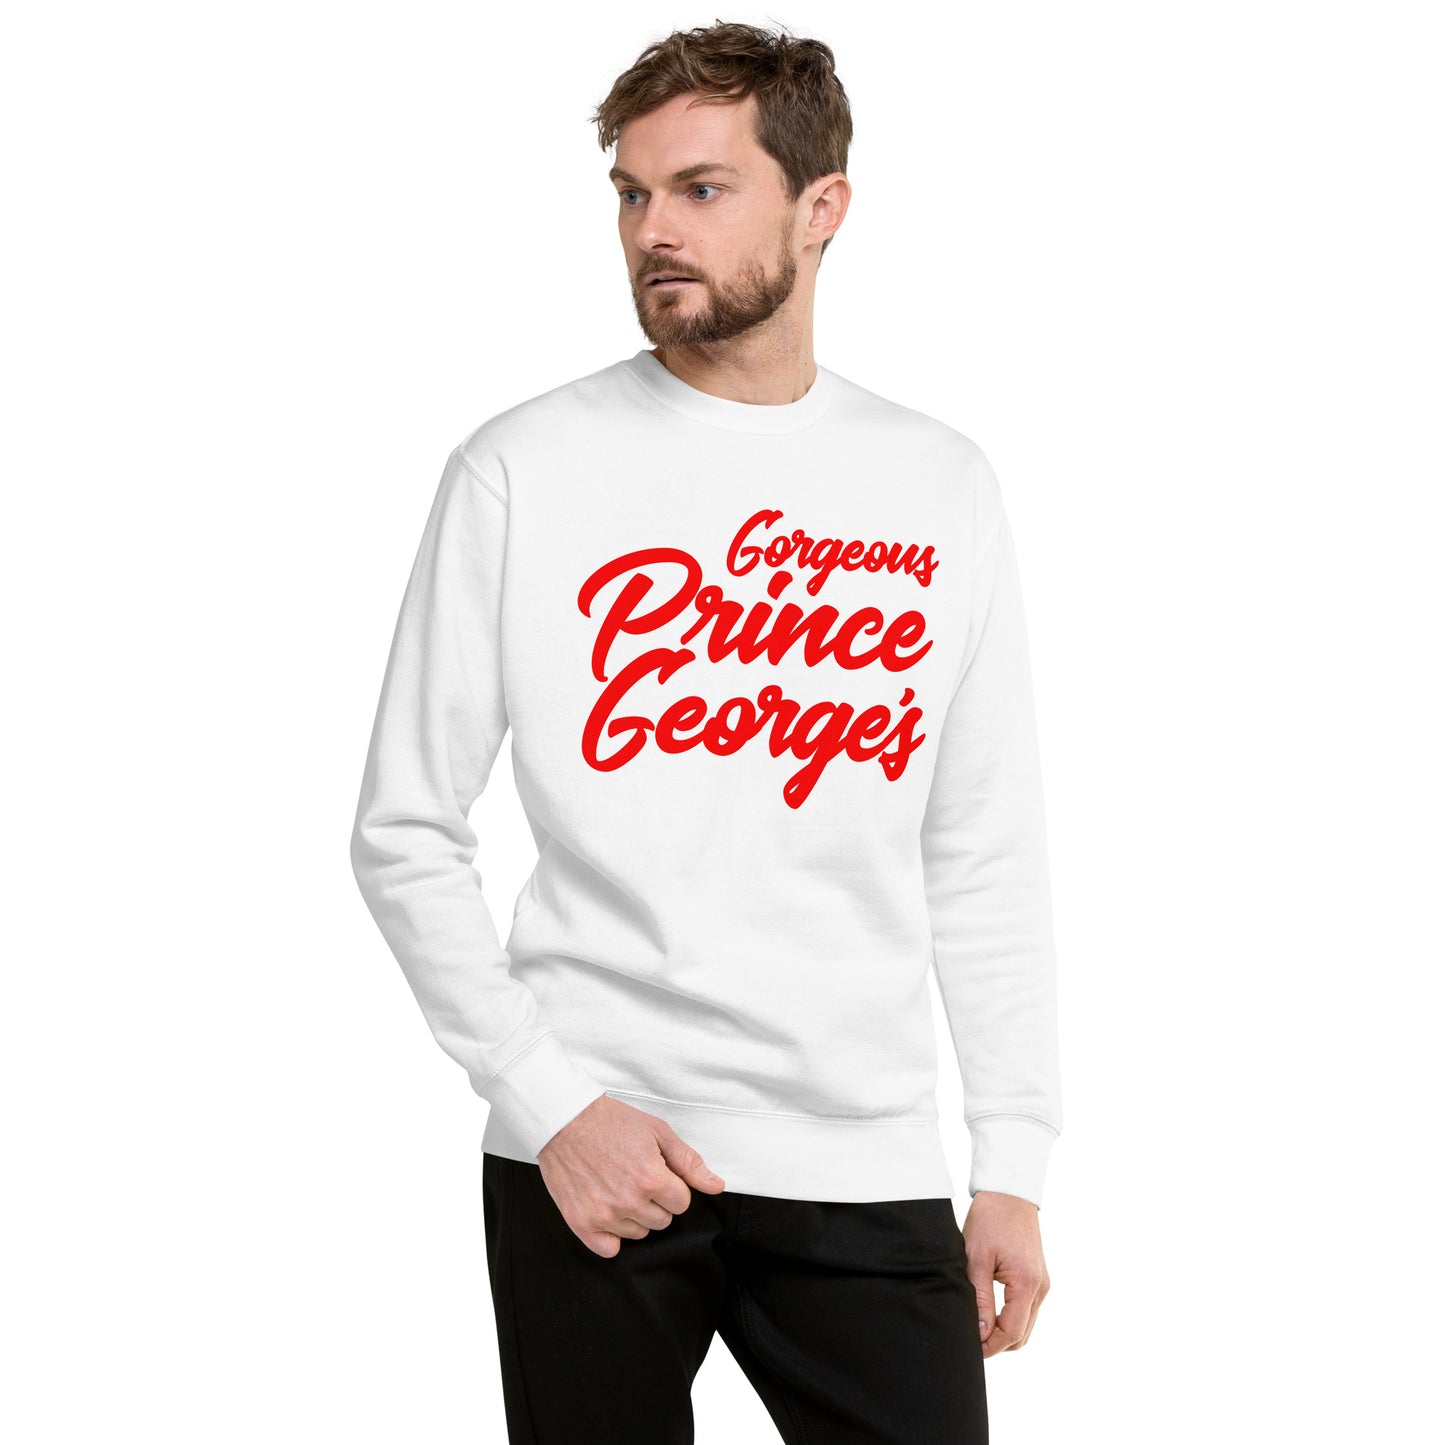 Gorgeous Prince George's Unisex Premium Sweatshirt